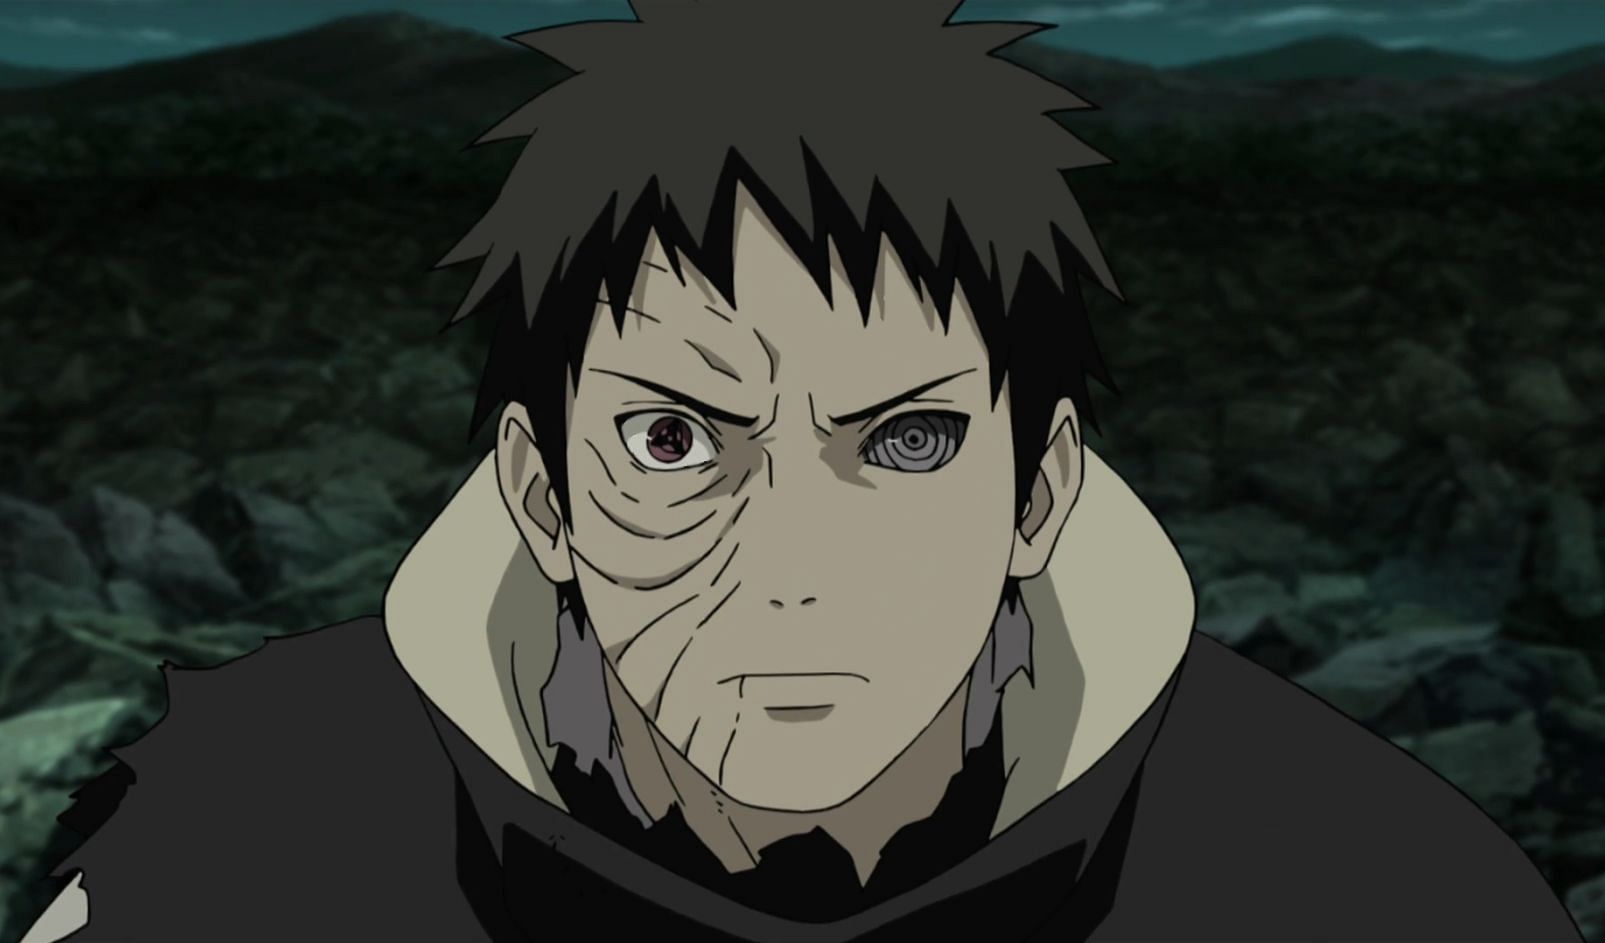 Obito was a prominent antagonist in Naruto (image via Studio Pierrot)